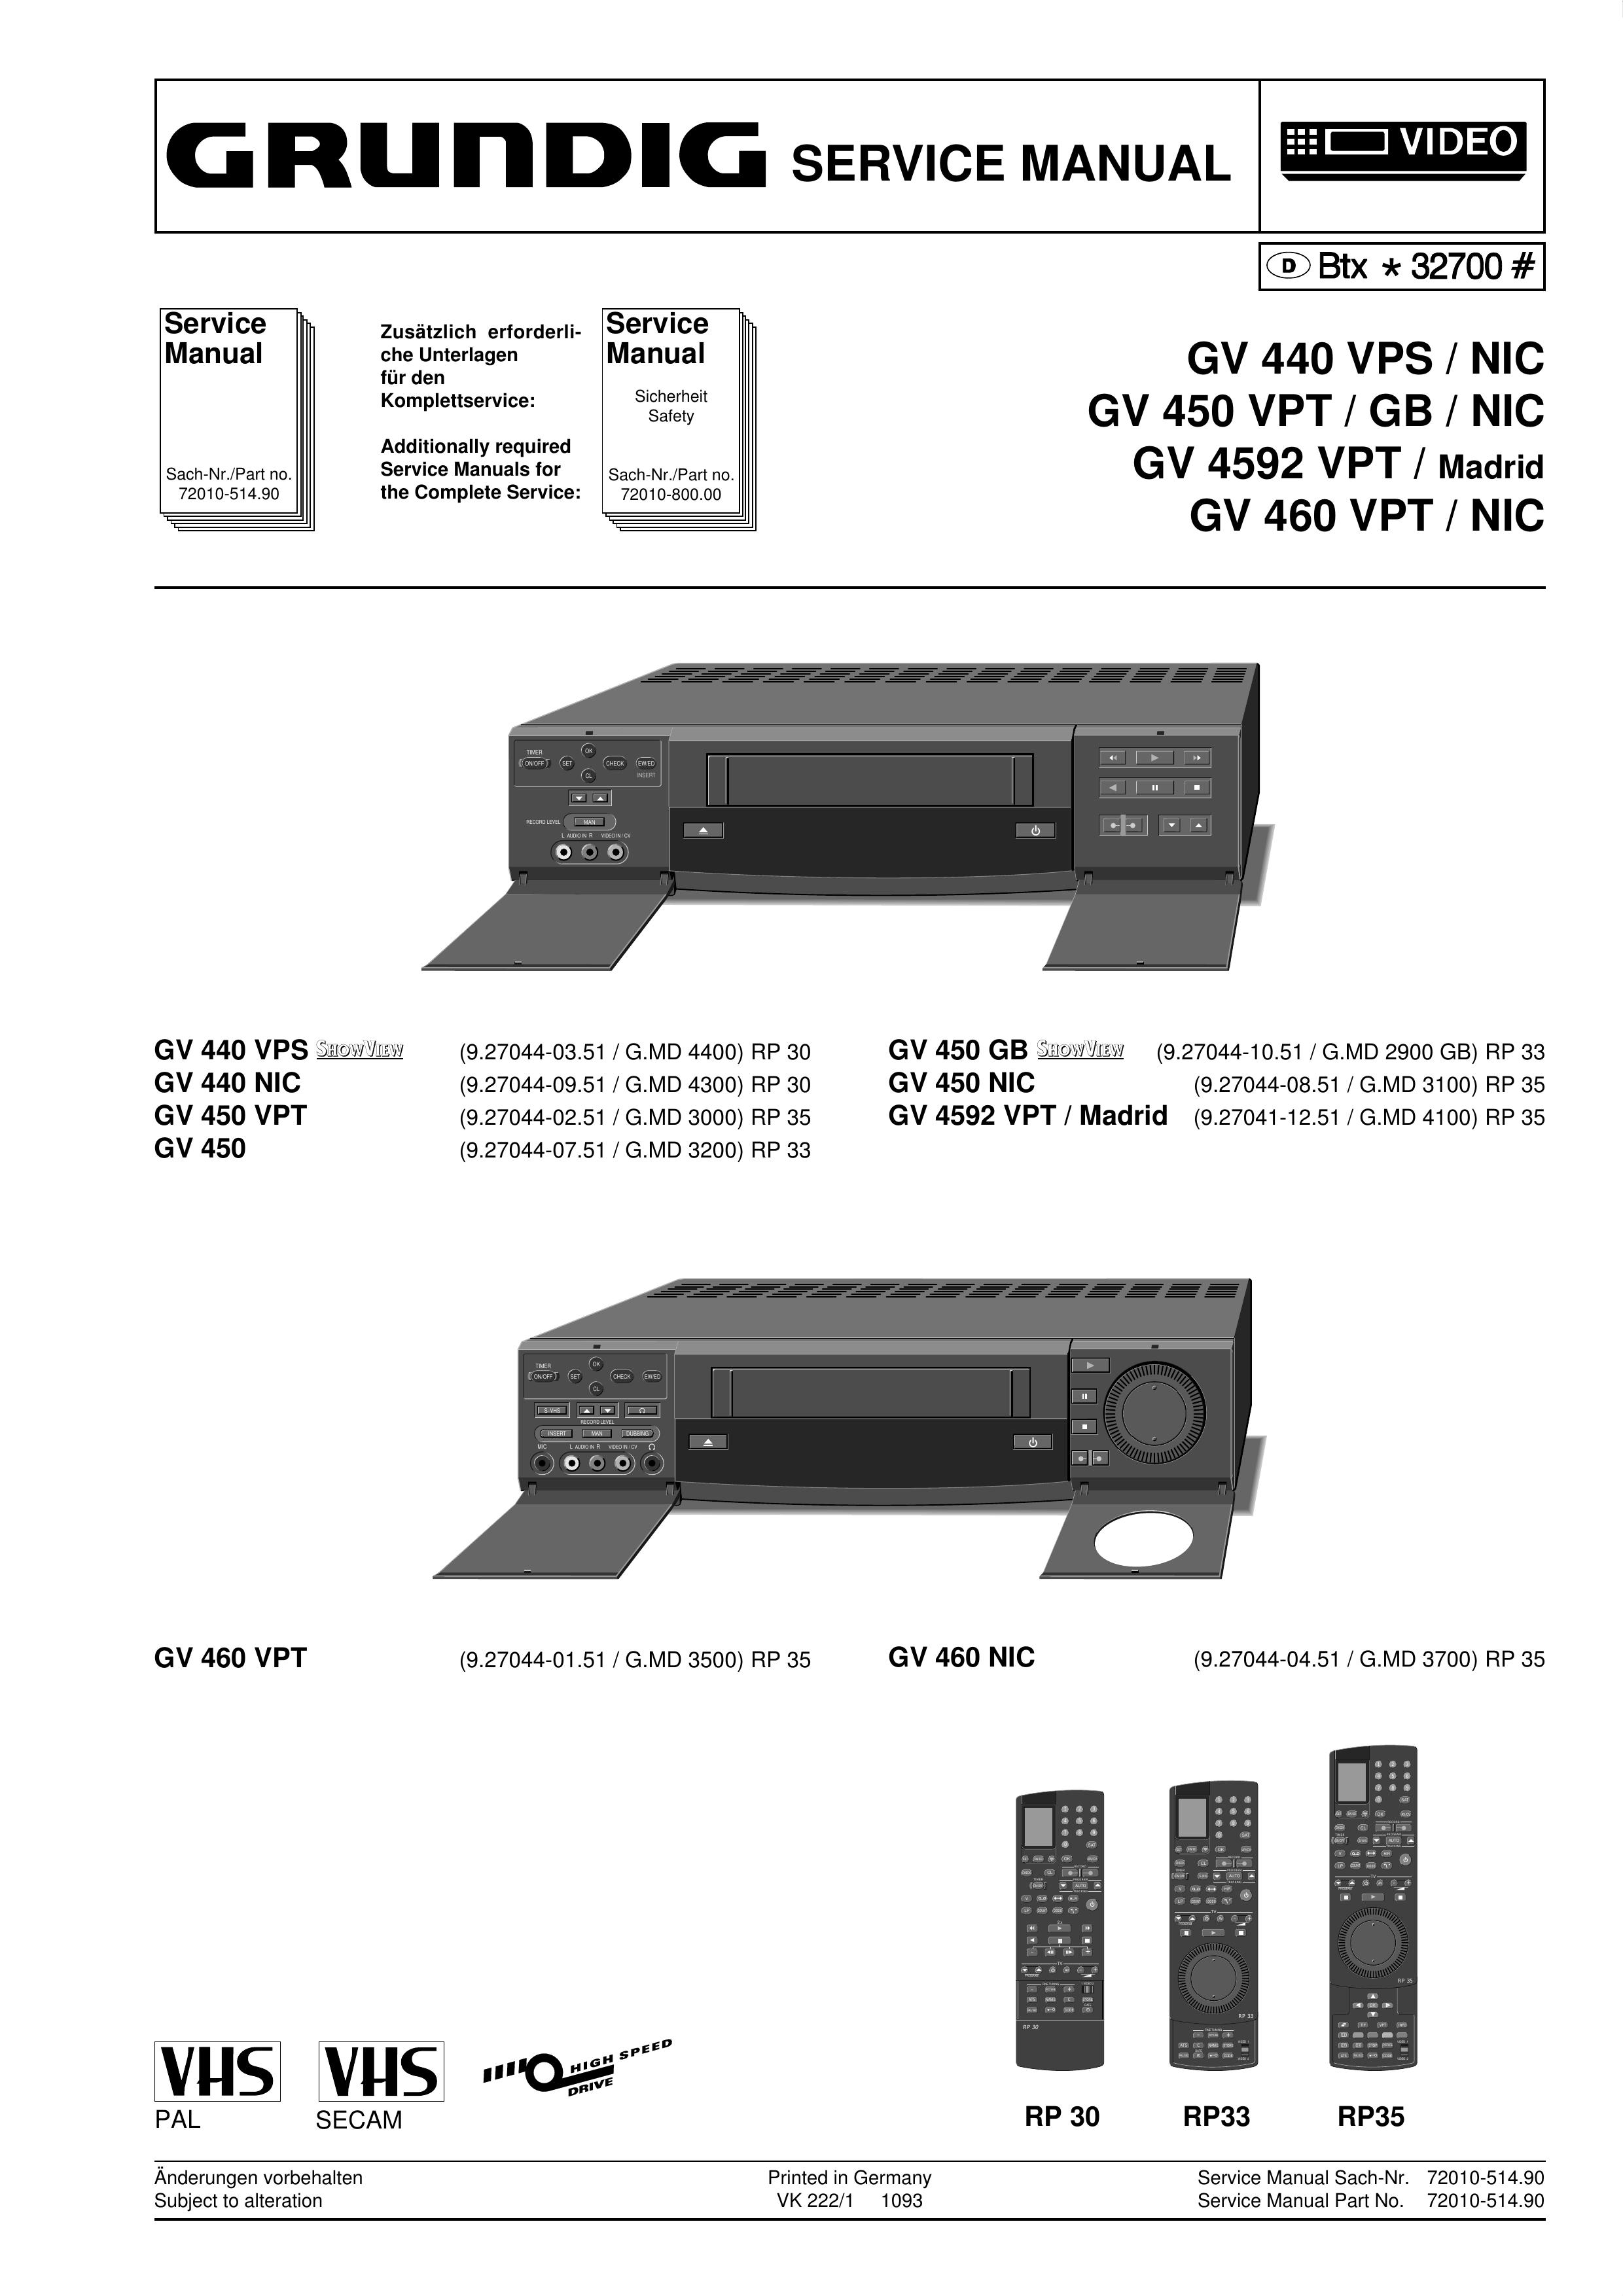 Grundig GV 450 VPT / GB / NIC Camcorder User Manual